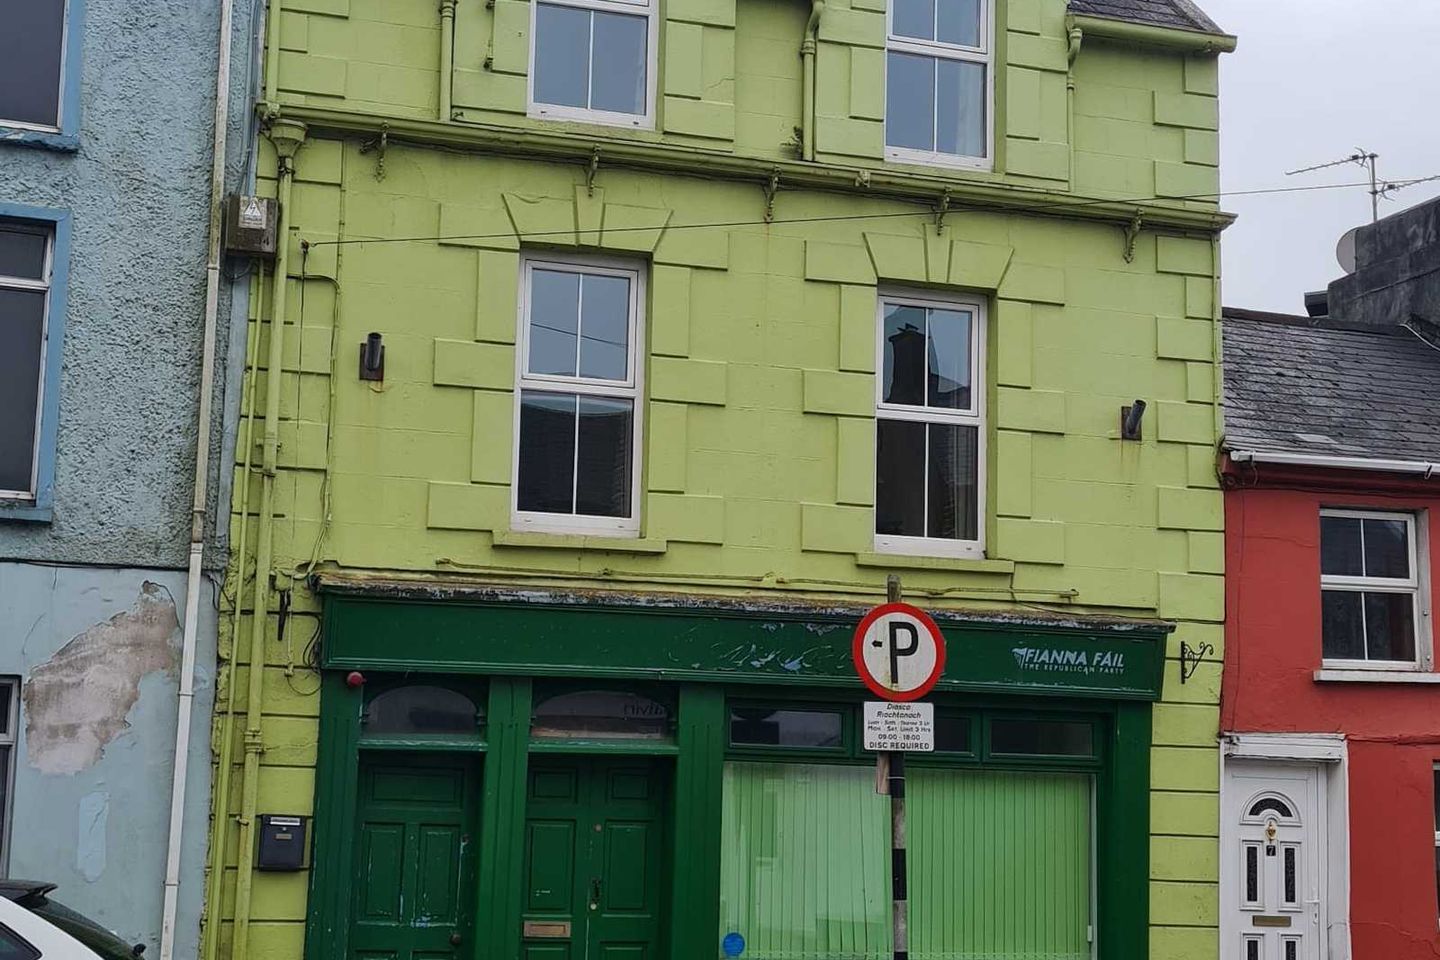 6 Saint Patrick's Place, New Road, Bandon, Co. Cork